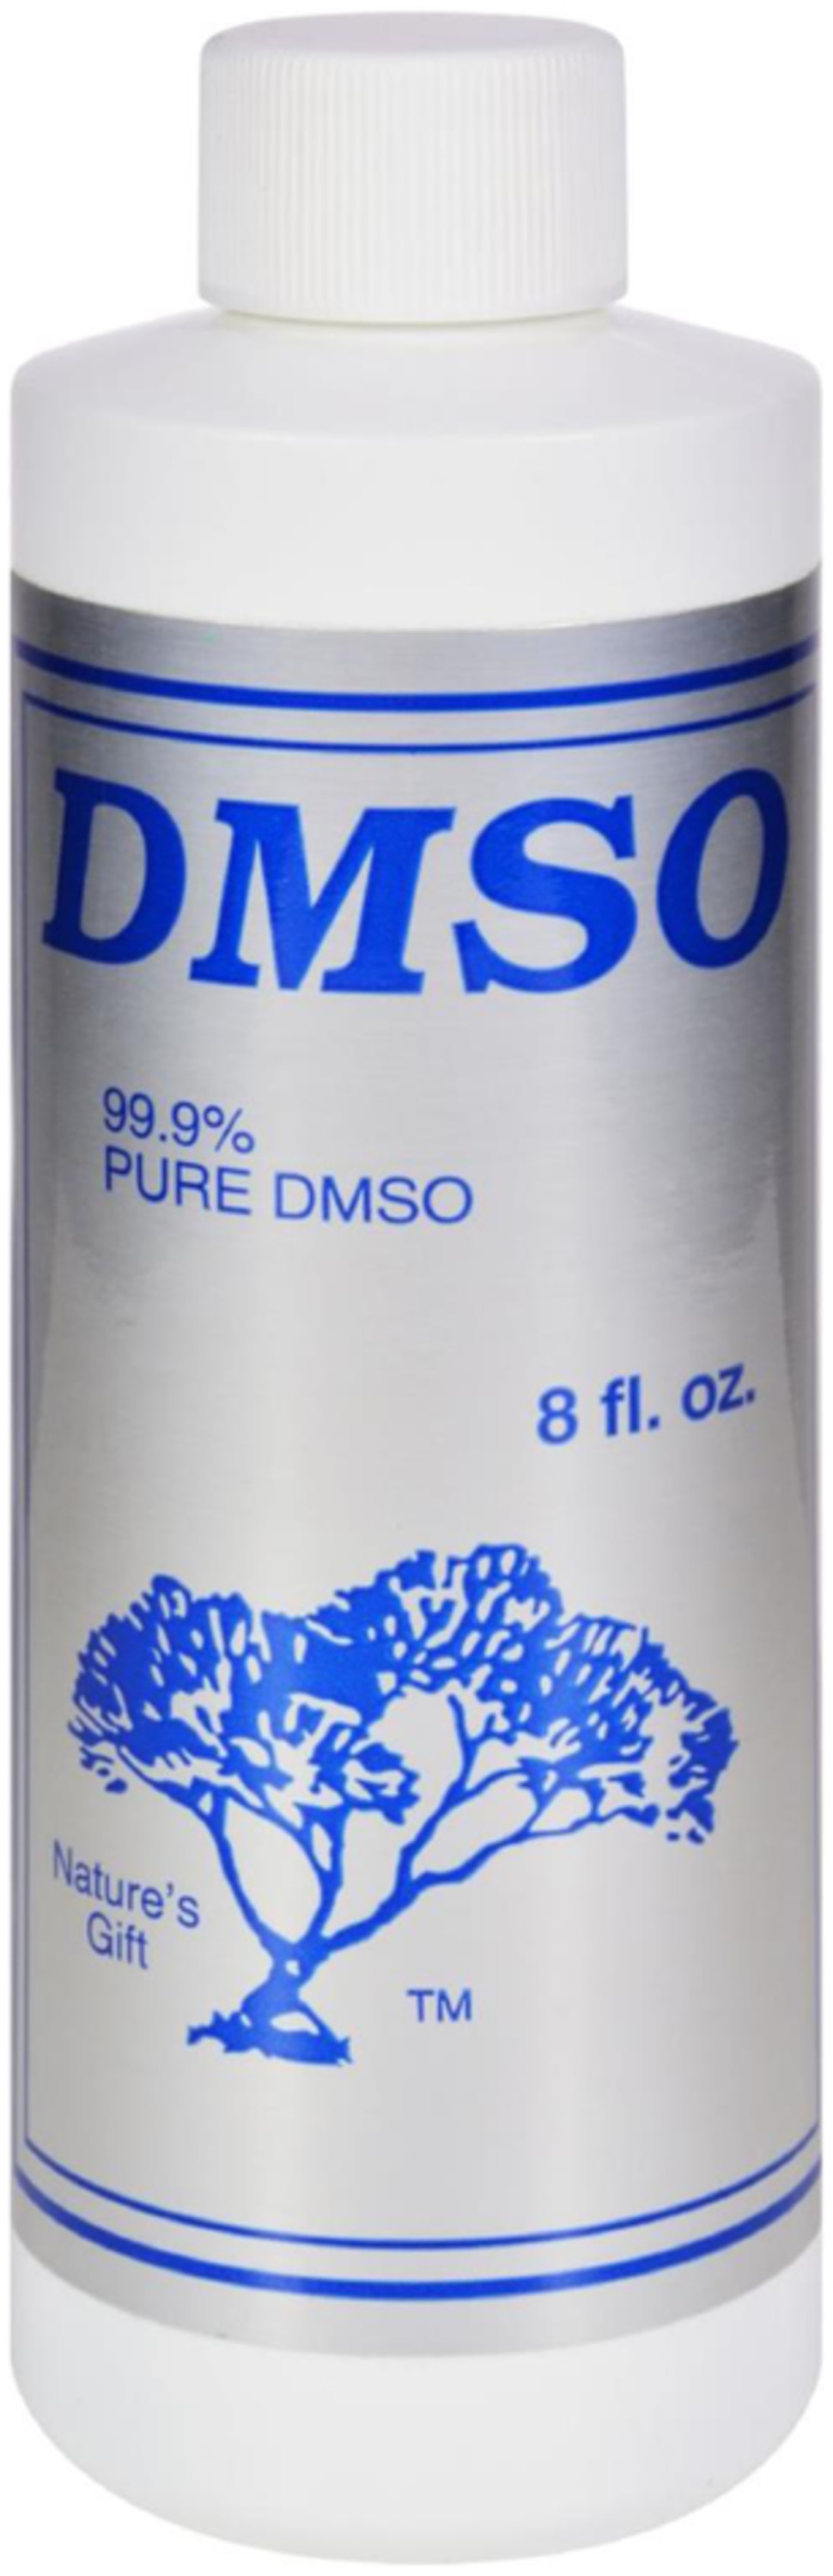 Nature's Gift DMSO Liquid Plastic - 4 oz (118 mL) 